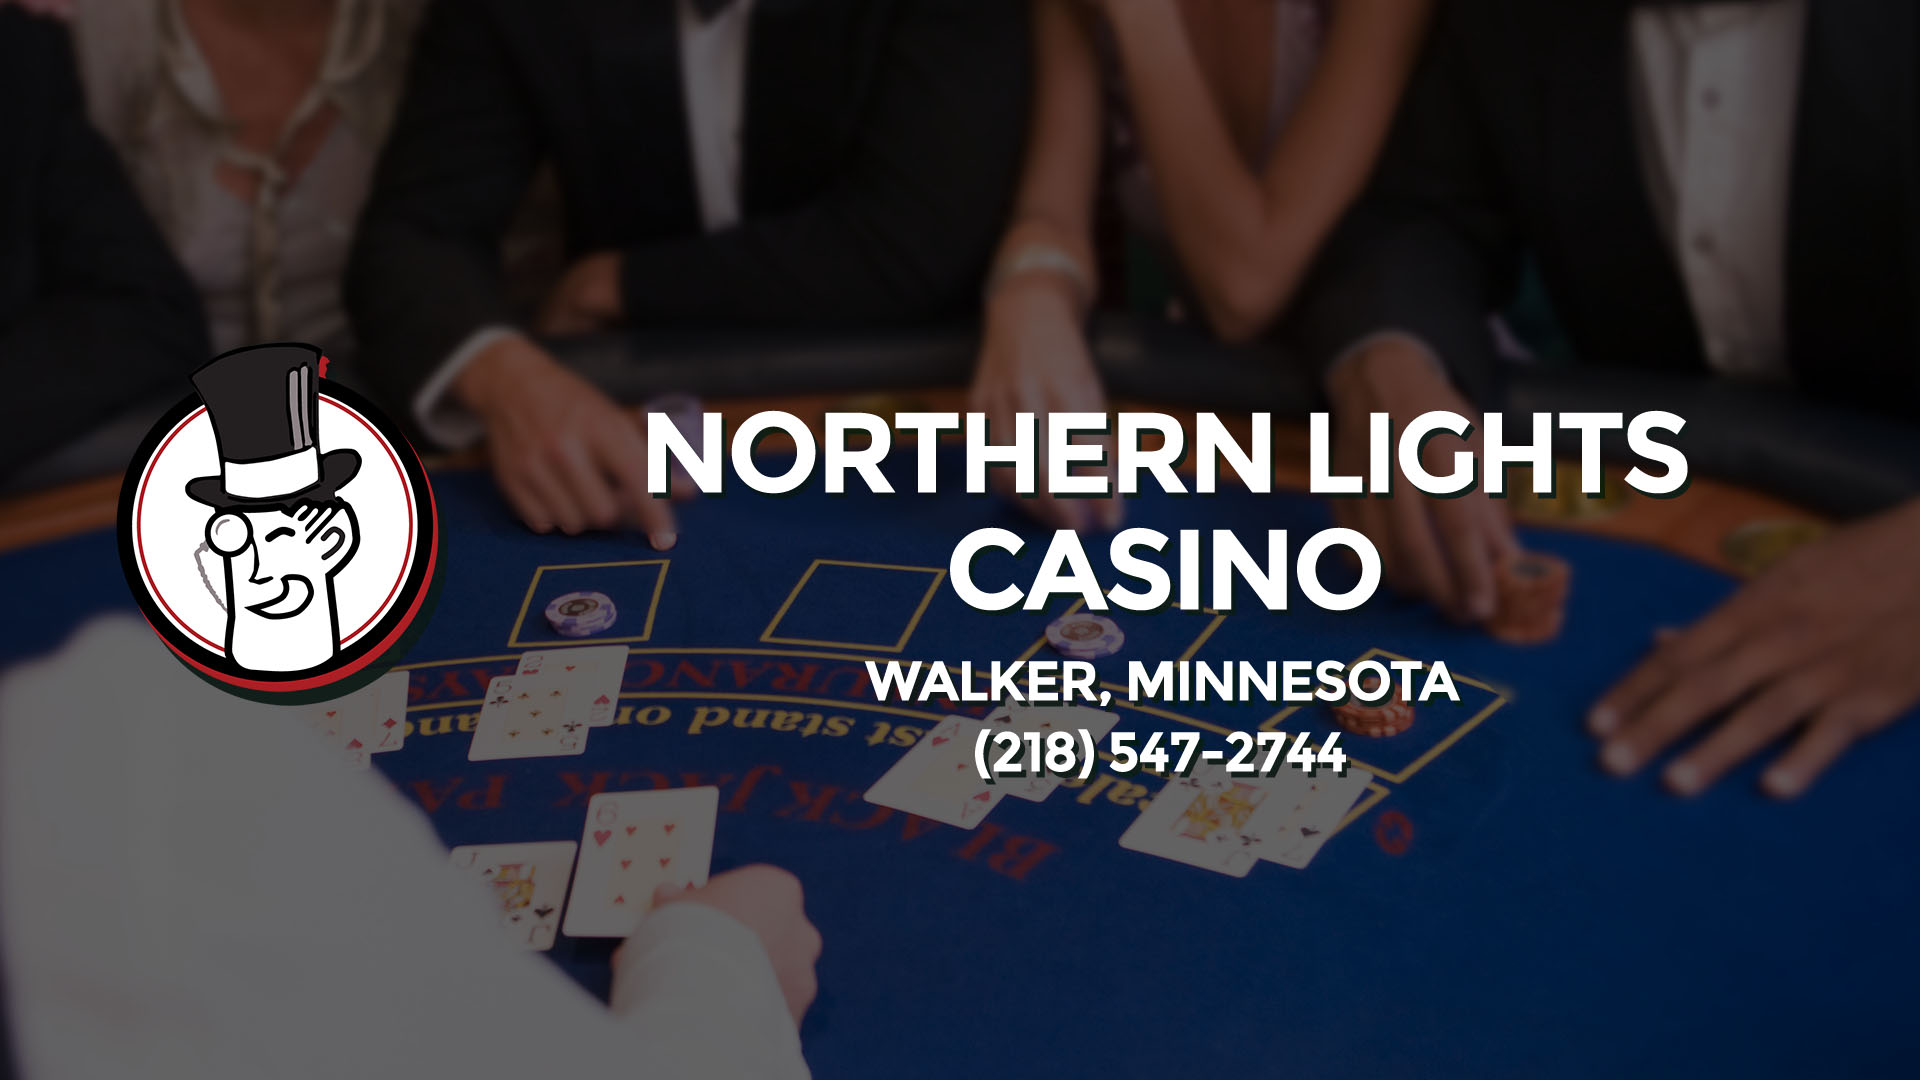 northern lights casino pays big